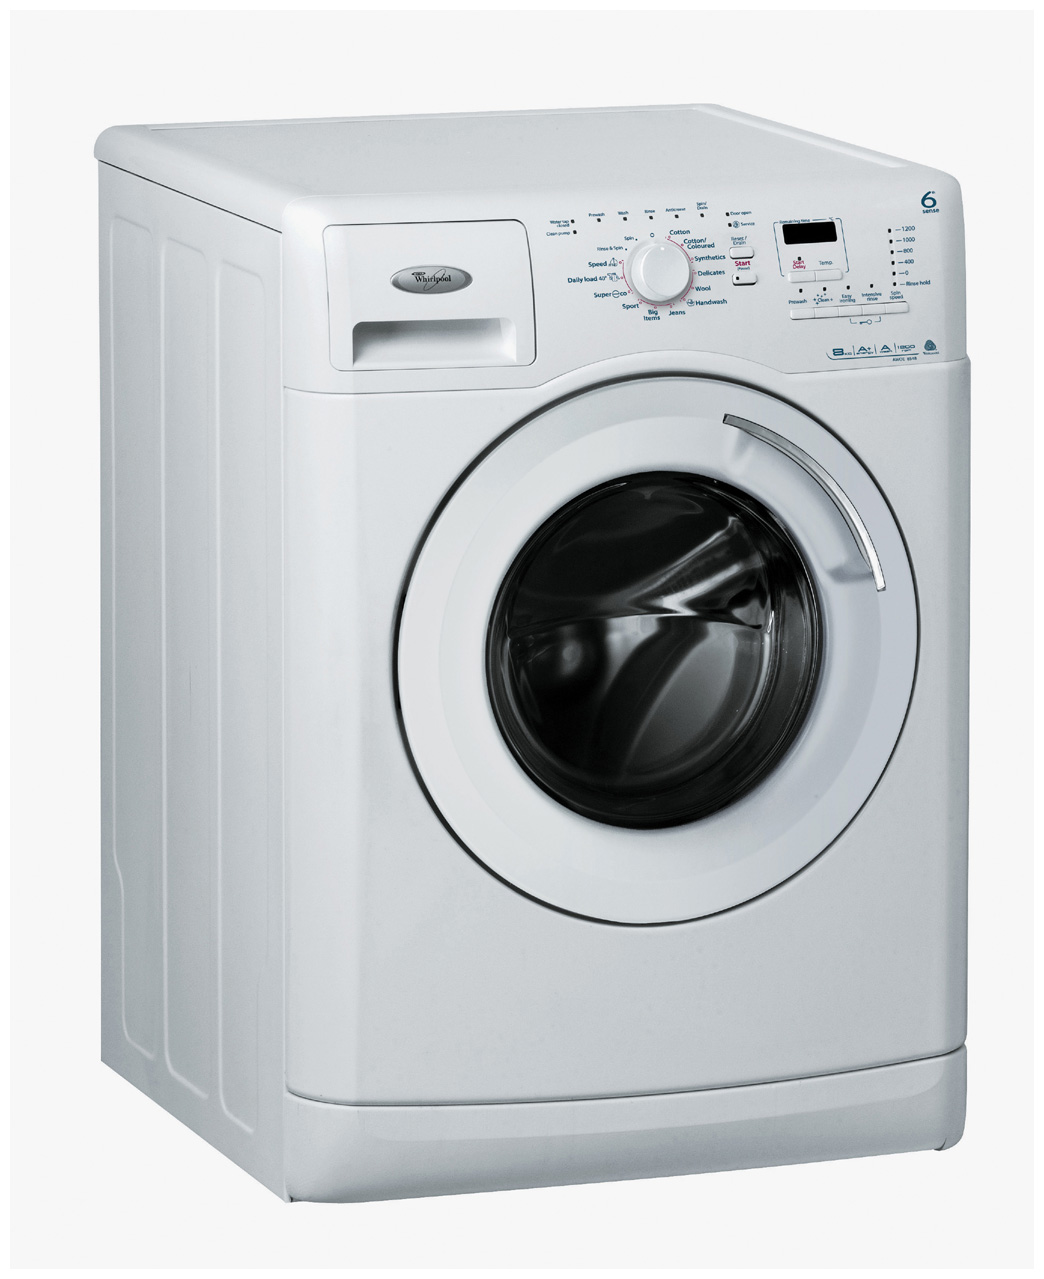 Kusuma Laundry Peralatan dasar usaha laundry